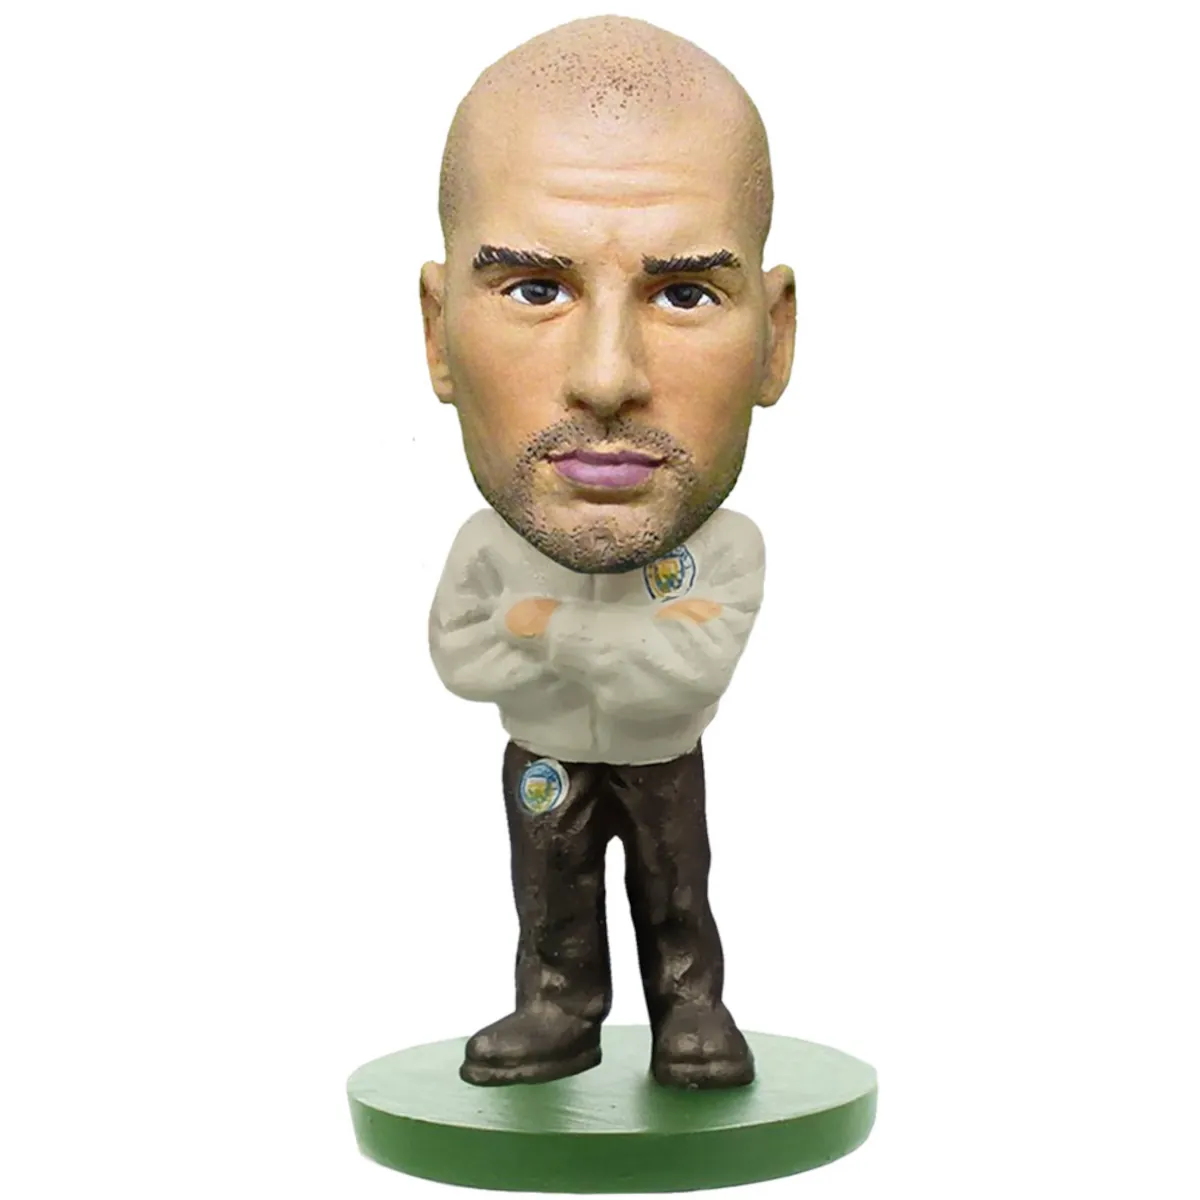 TM-03548 Manchester City FC SoccerStarz Collectable Figure - Pep Guardiola